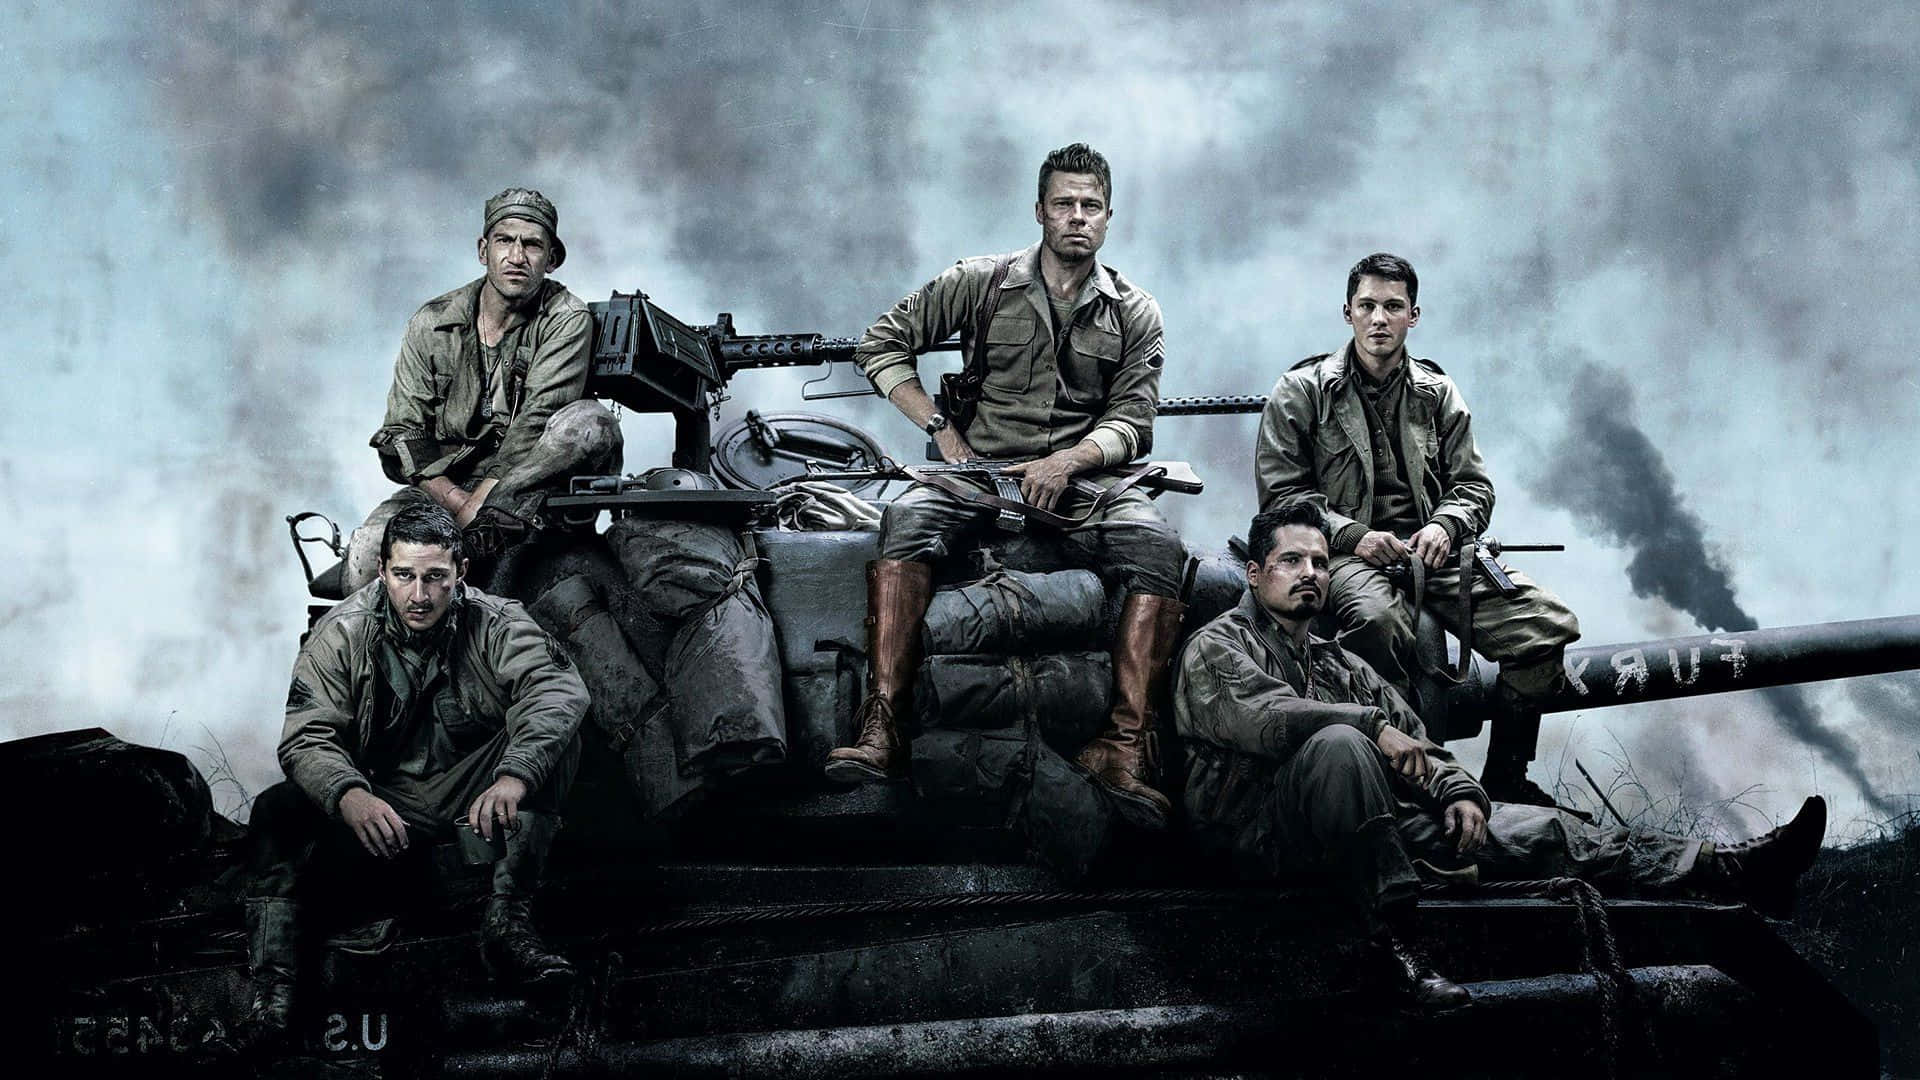 Immaginidel Film 'fury' Con I Soldati